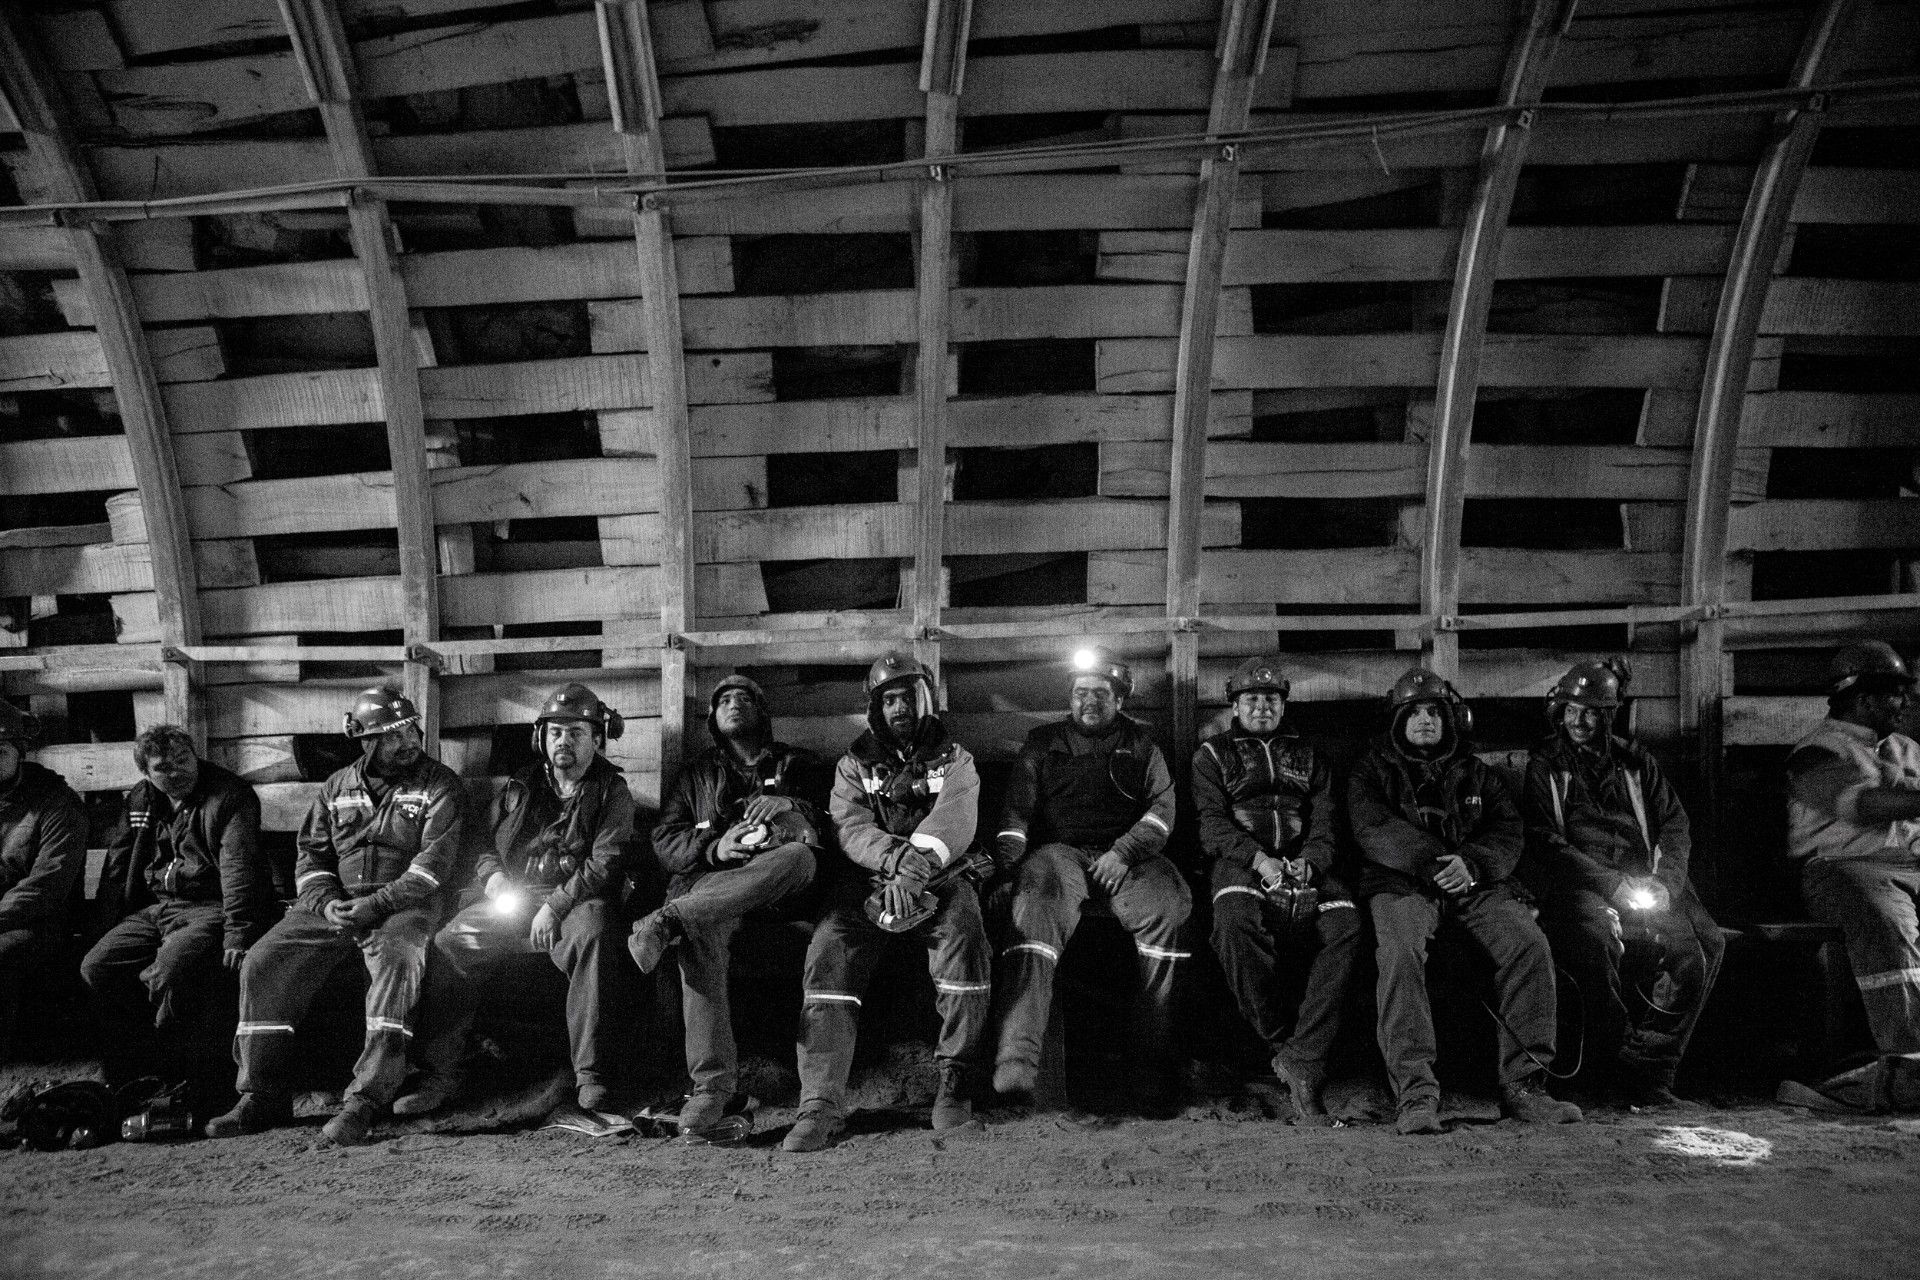 Trabajadores de la mina de Río Turbio.
Foto: Viojf